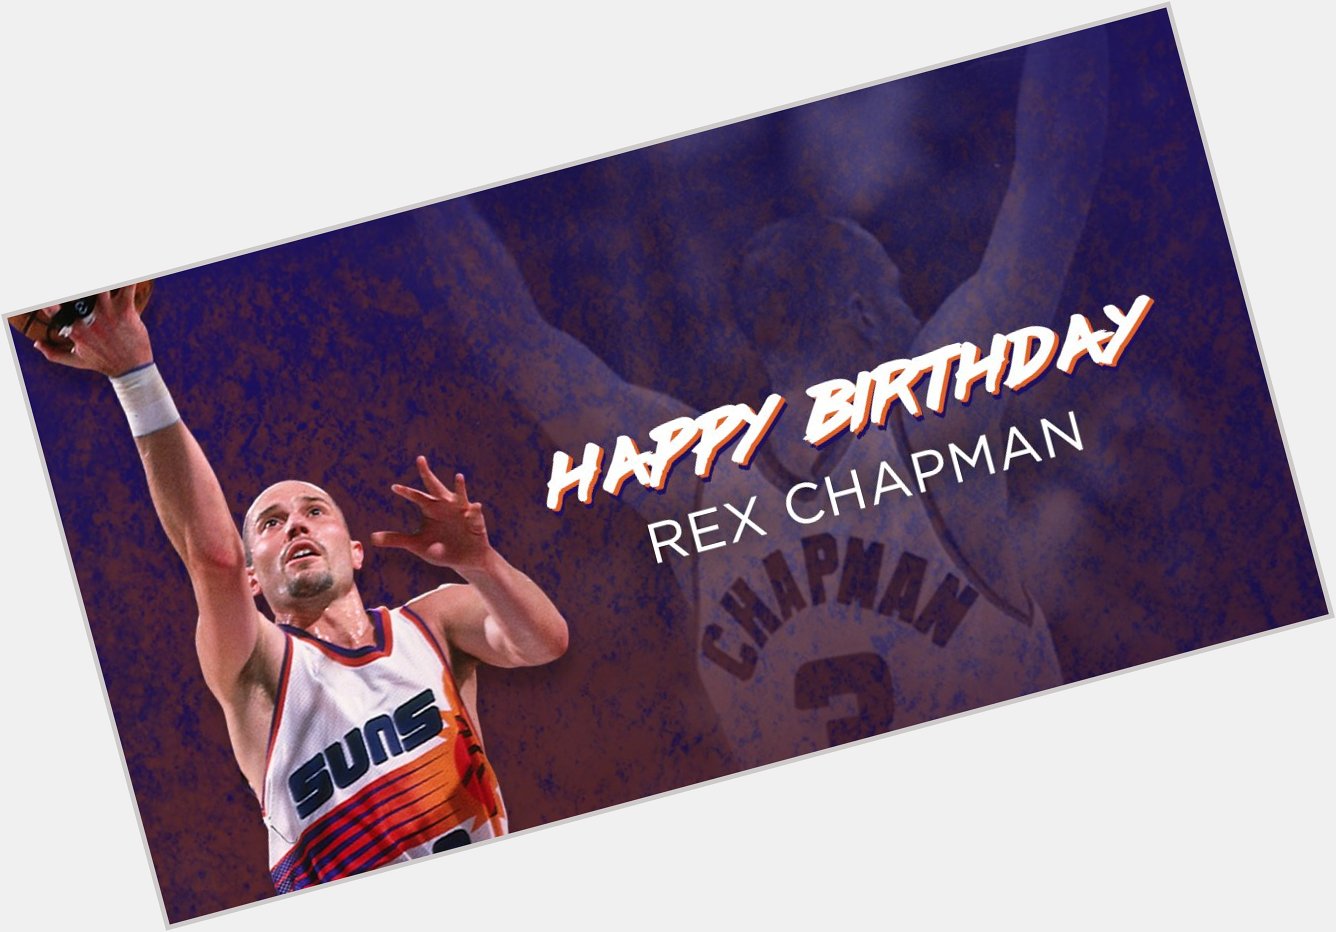 Join us in wishing Rex Chapman a happy birthday! 